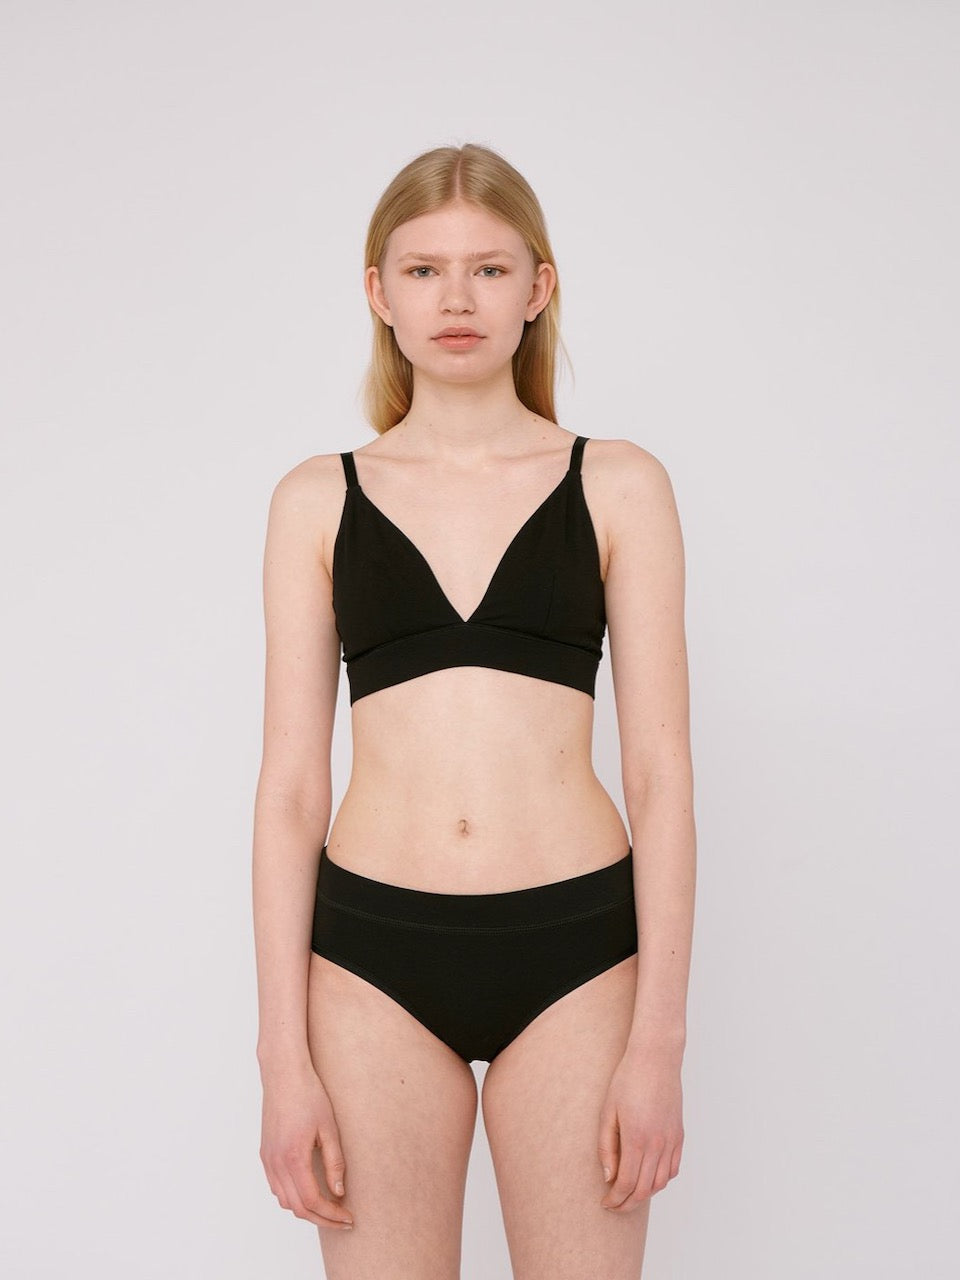 The model is wearing a black Bikini Briefs ⋅ organic cotton (2-pack) – Black by Organic Basics top.